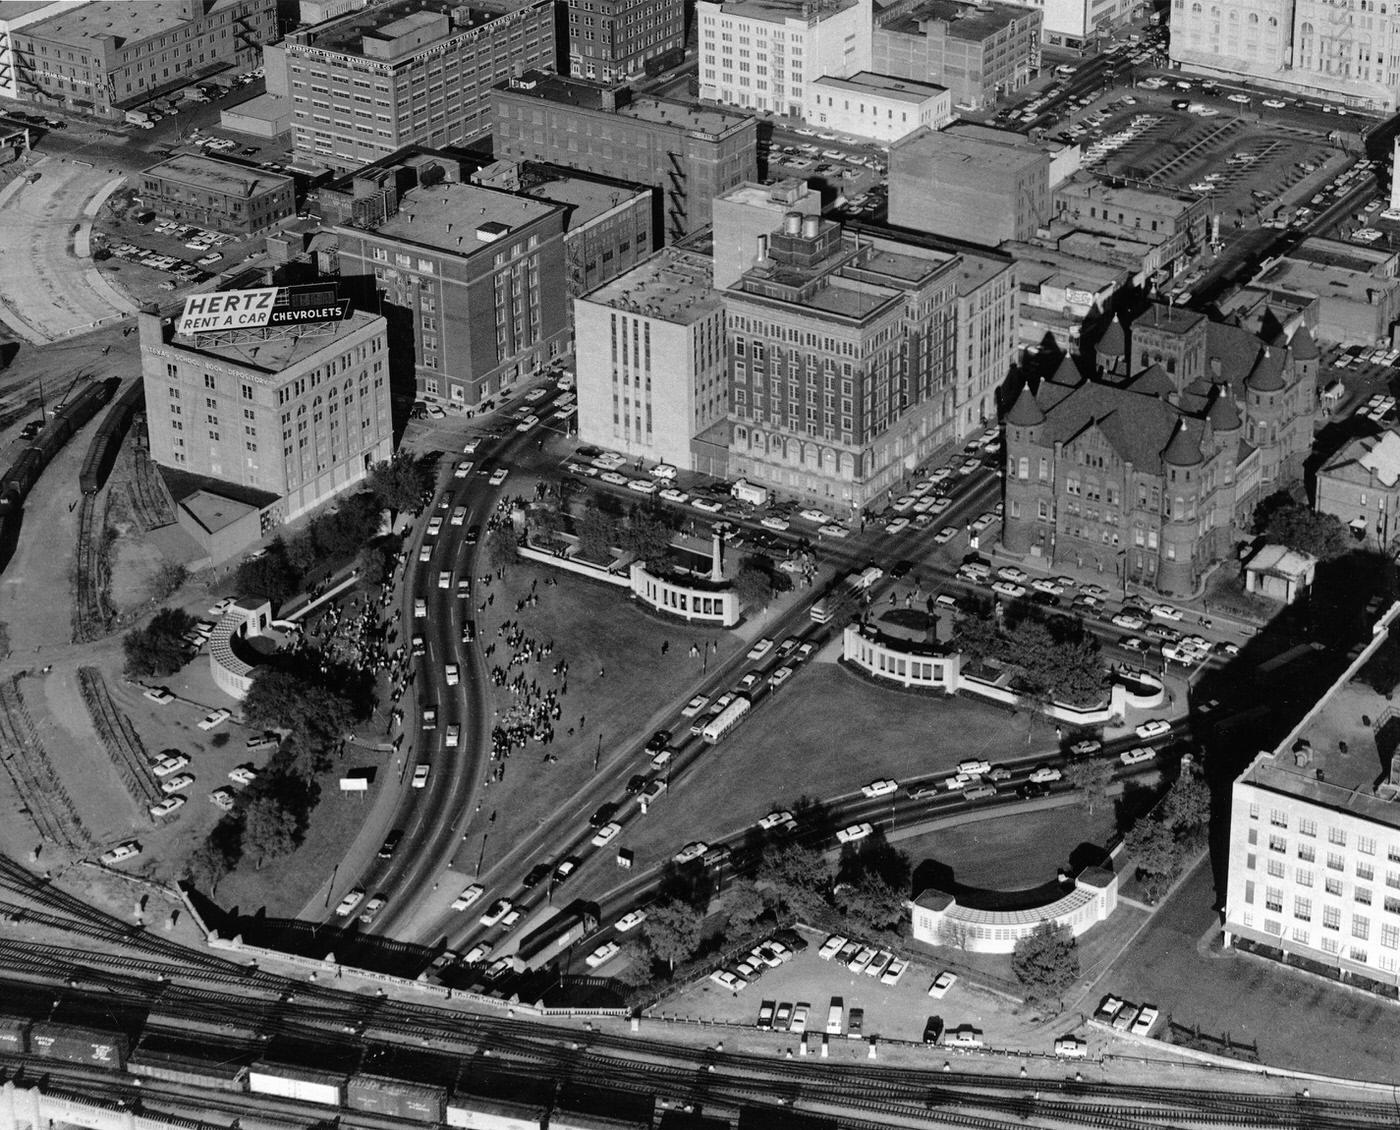 Dealey Plaza, Dallas, Texas 2 days following assassination of President John F. Kennedy, 1963